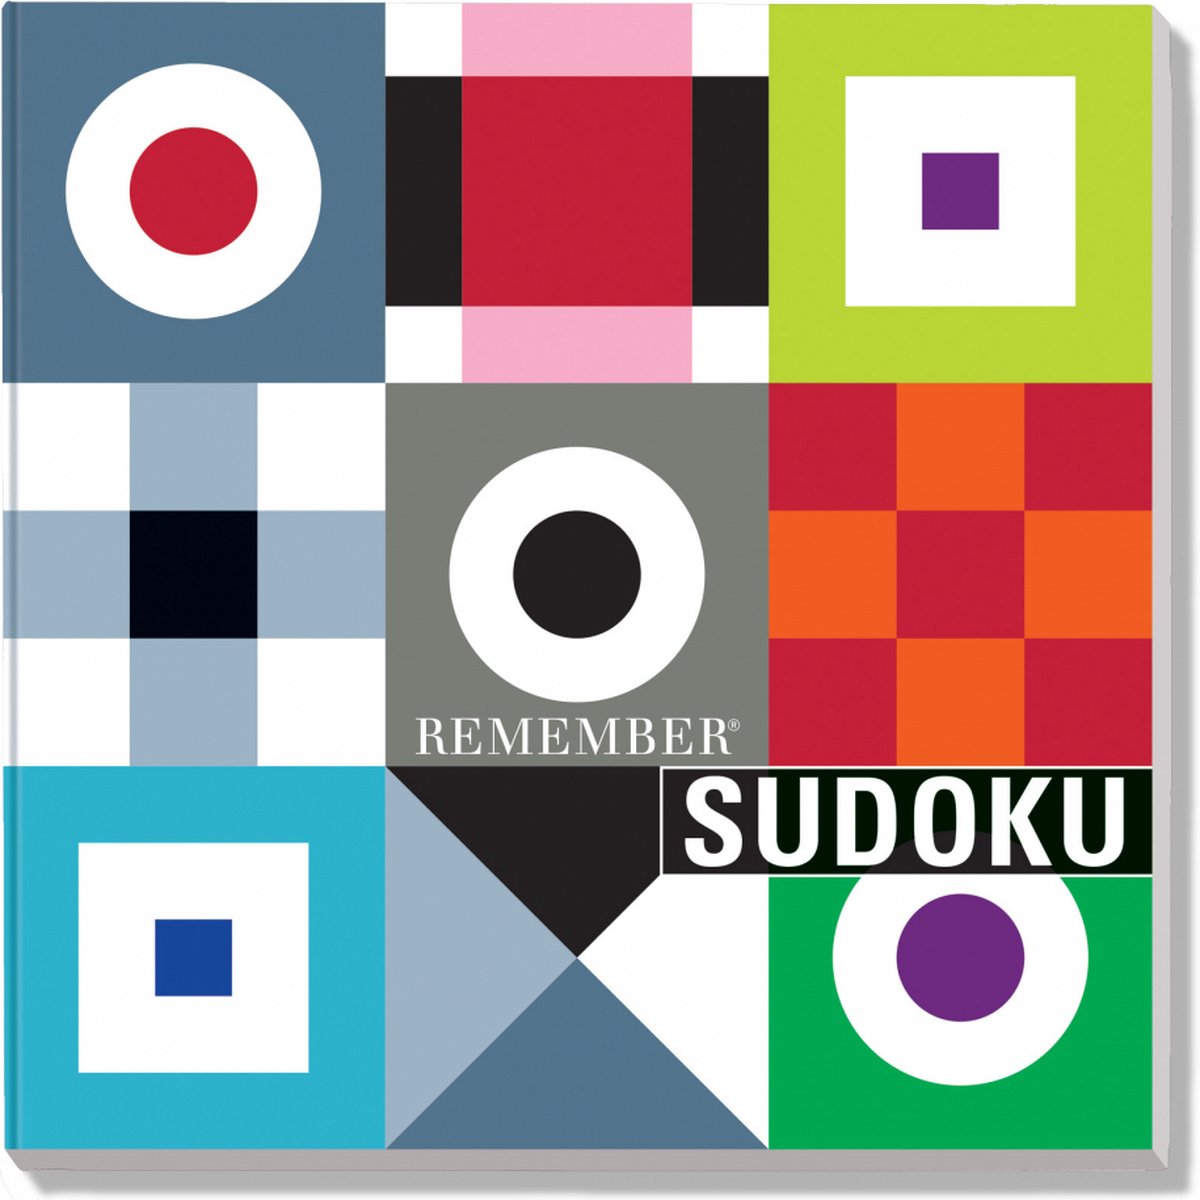 Remember - Spel Sudoku - Hout - Multicolor